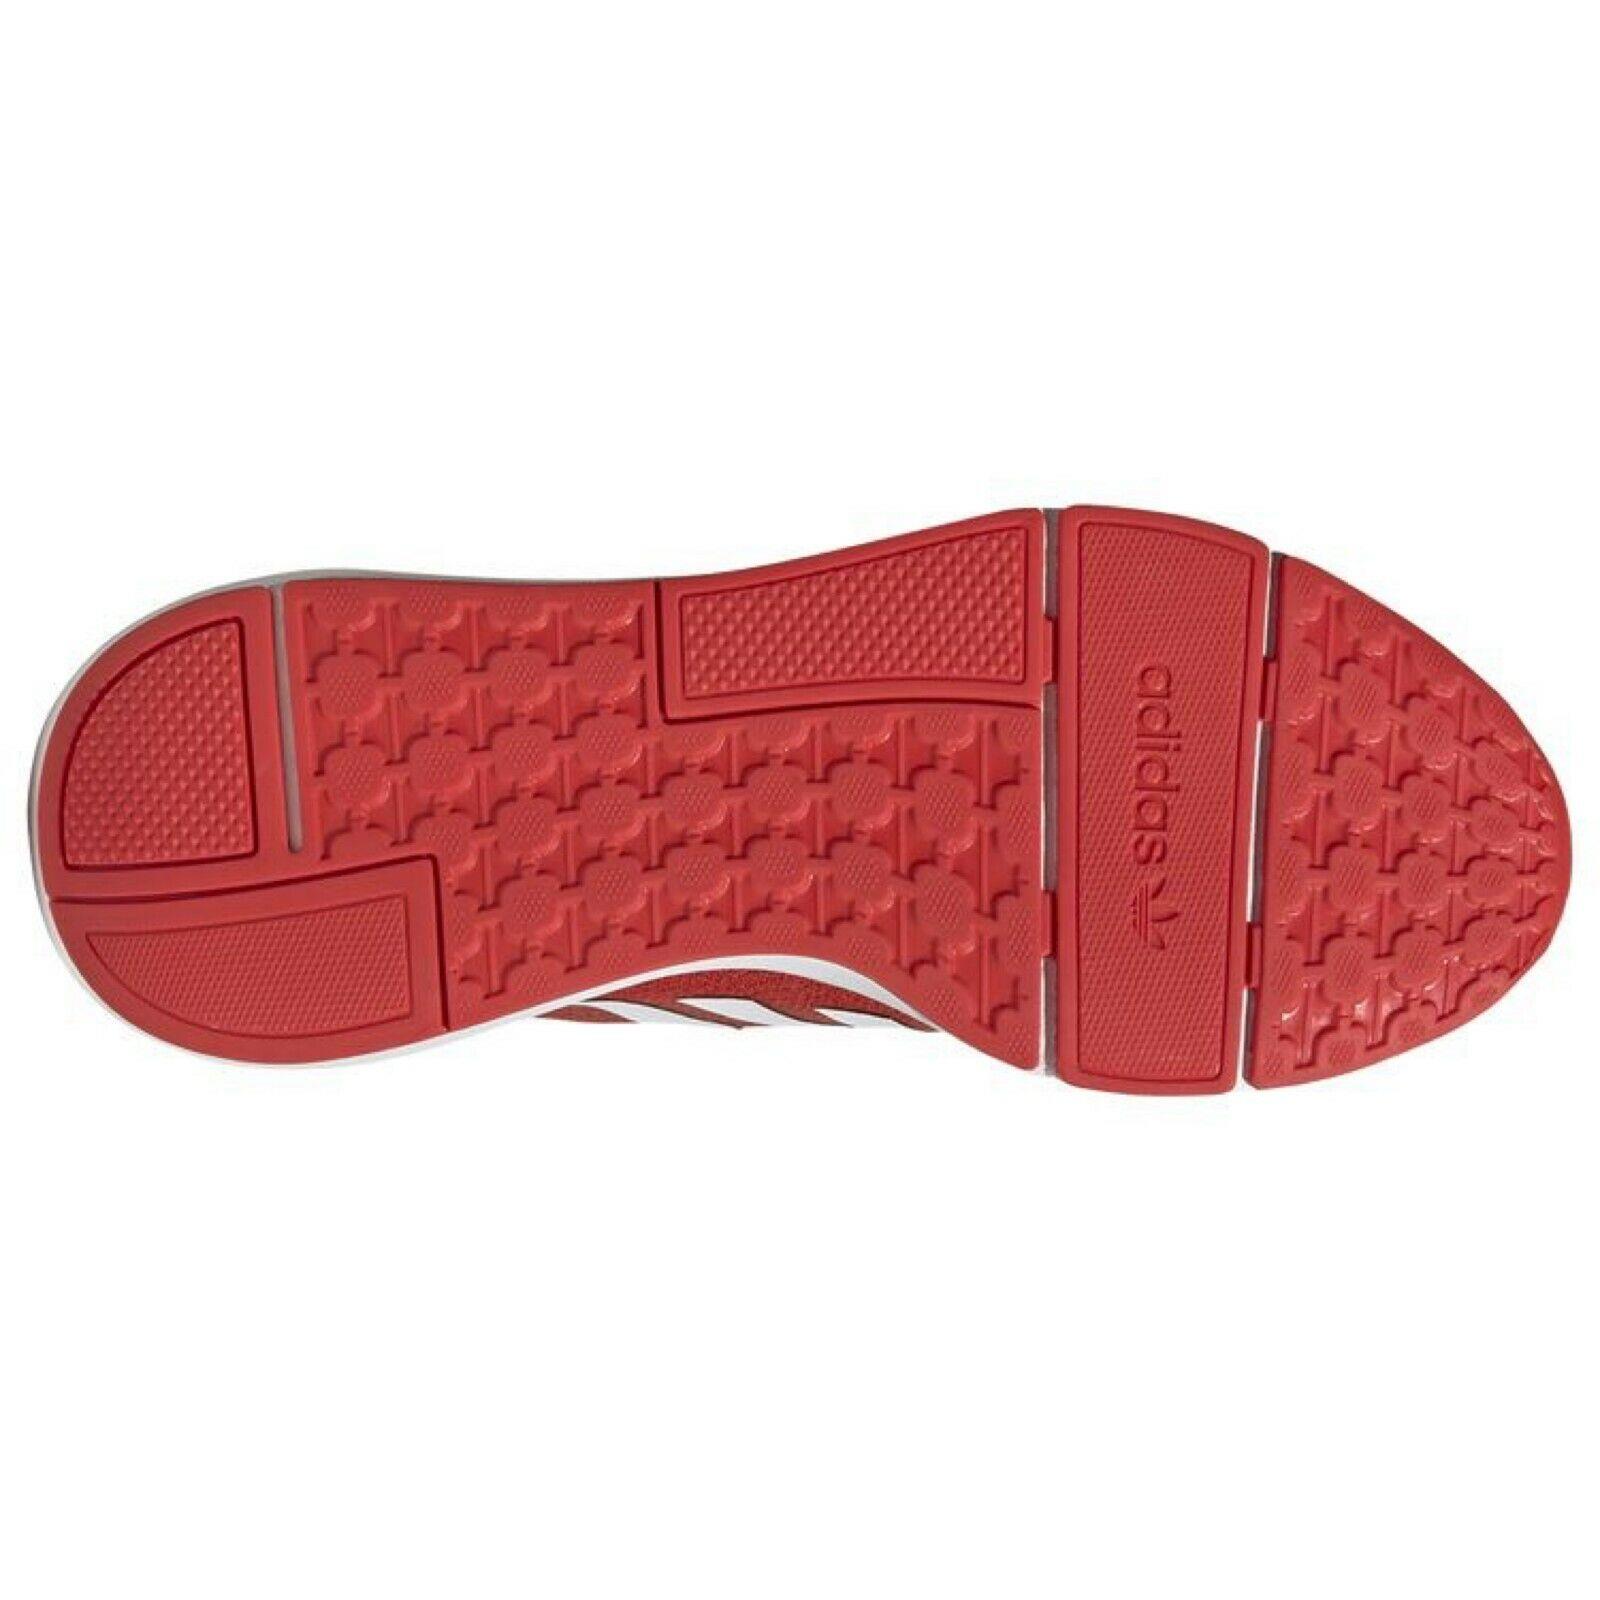 Adidas shoes Originals Swift Run - Red , Red/Black Manufacturer 10